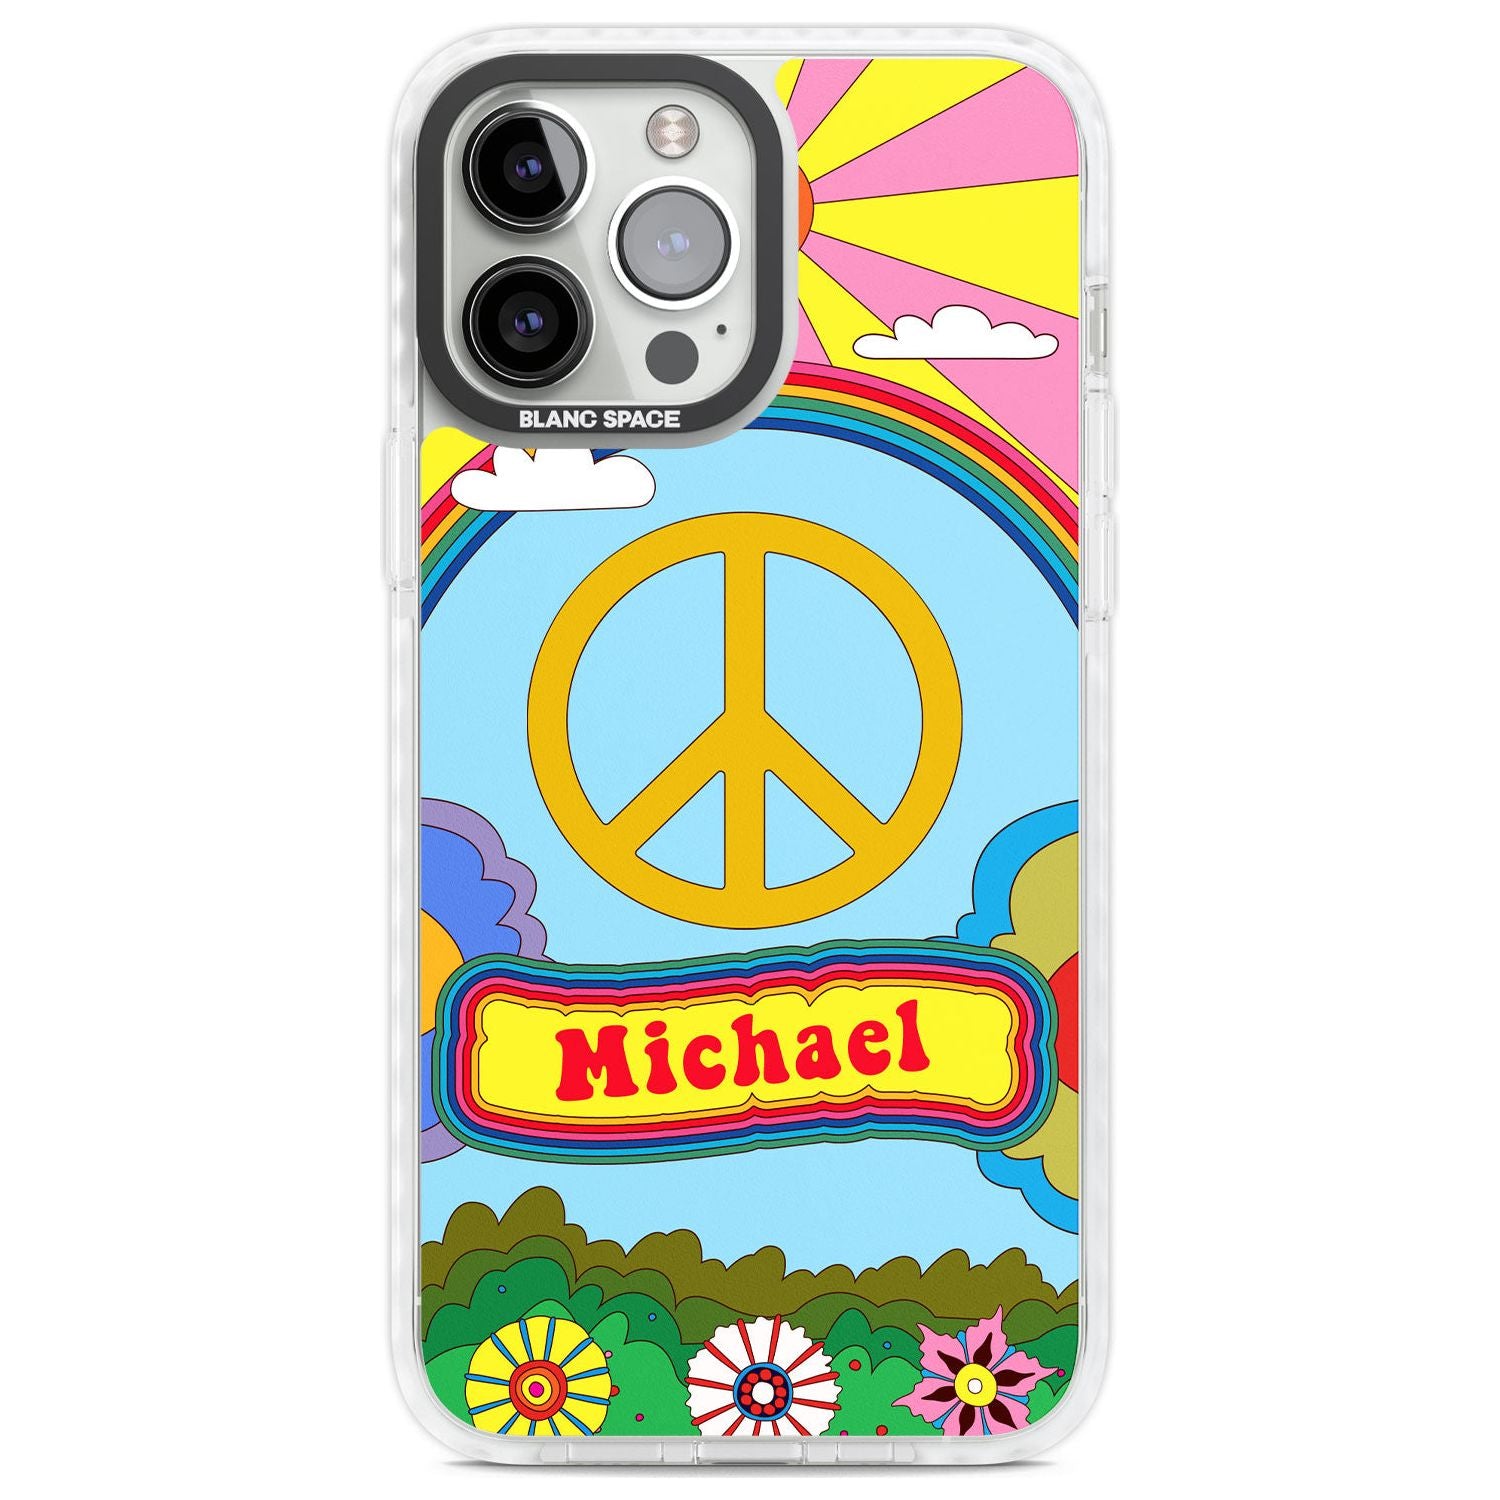 Personalised Happy Days Phone Case iPhone 13 Pro Max / Impact Case,iPhone 14 Pro Max / Impact Case Blanc Space